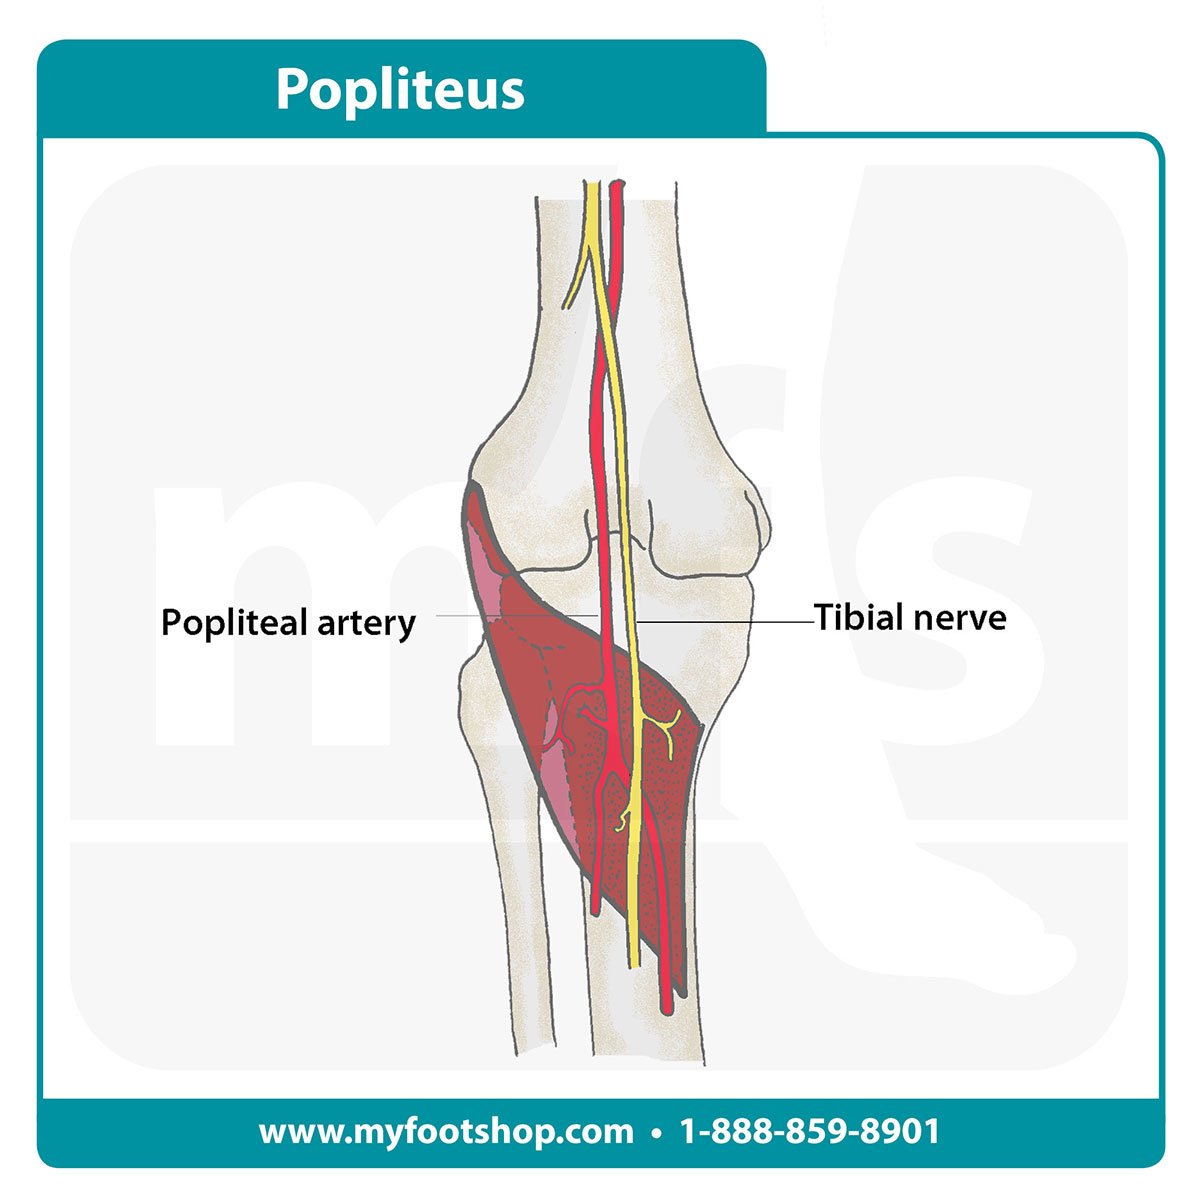 Popliteus muscle